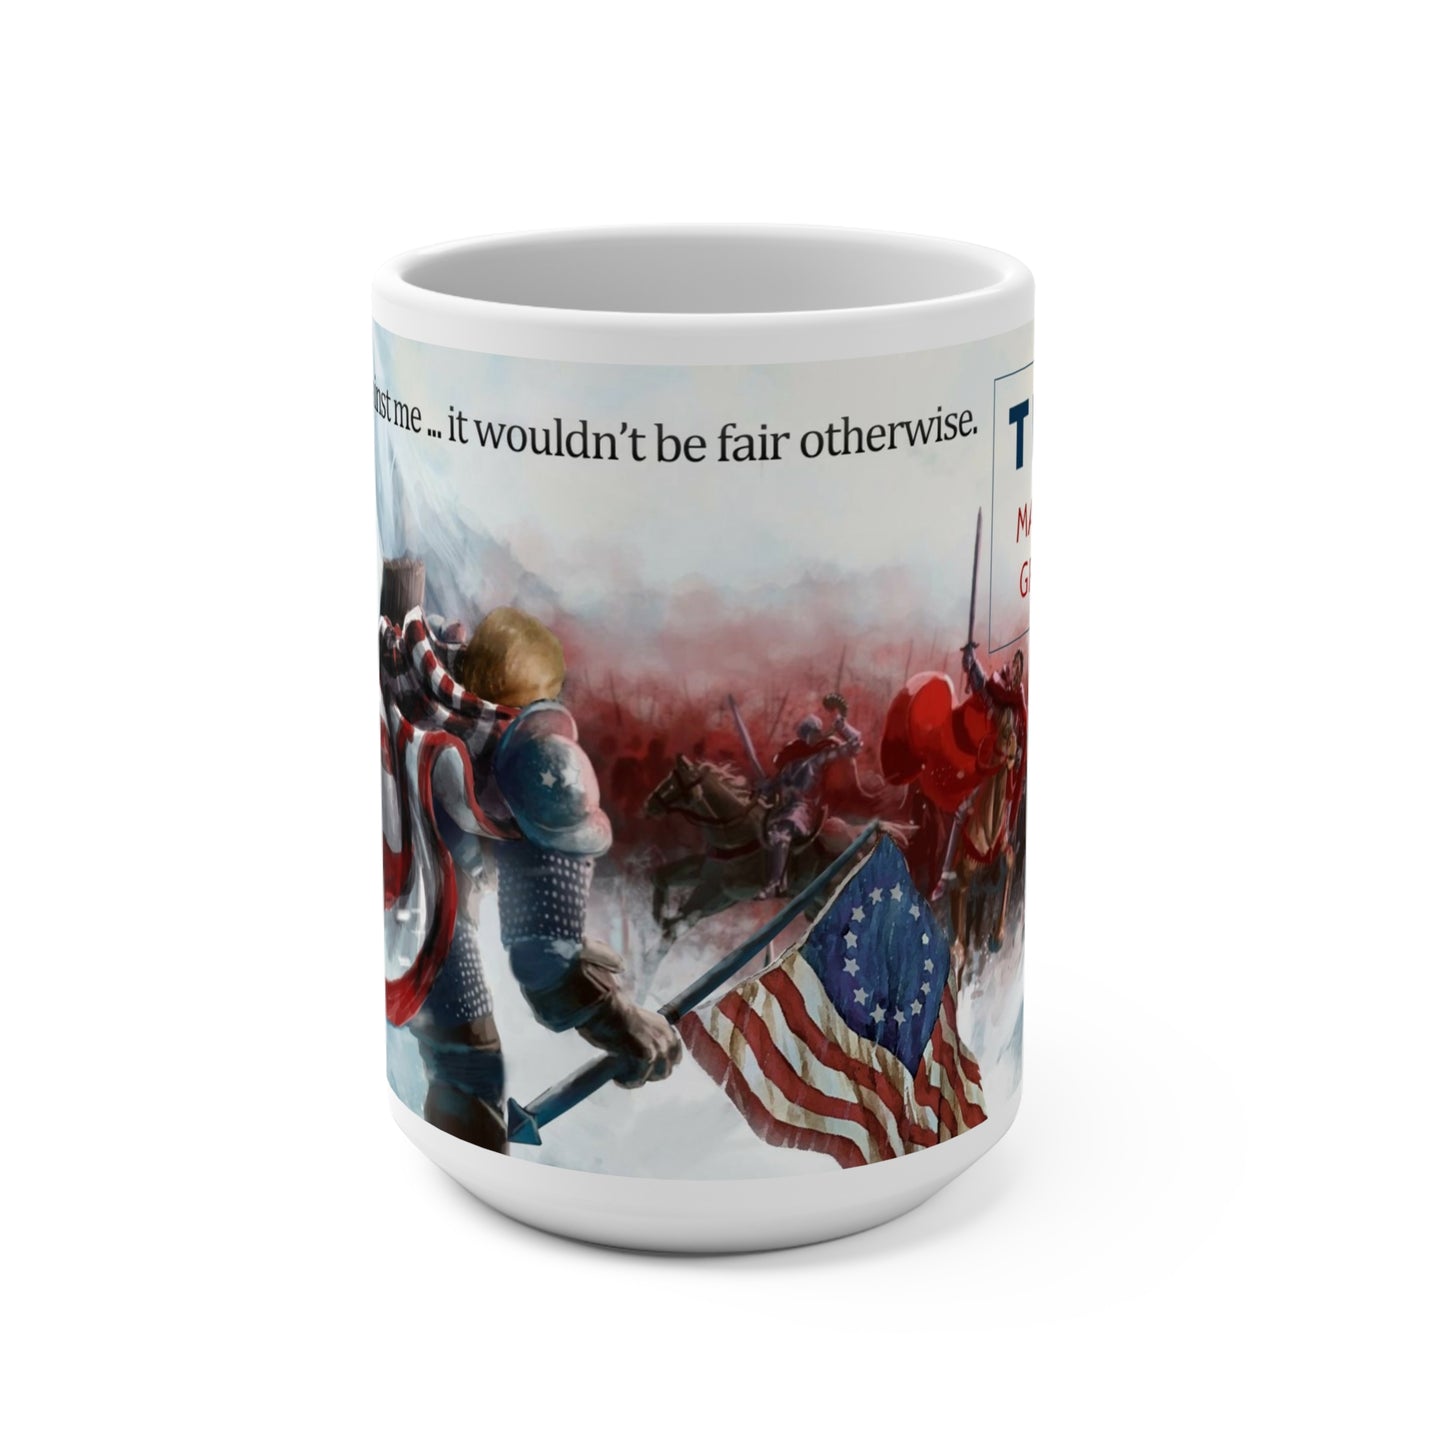 Trump the Patriot Warrior gift Jumbo Ceramic Coffee Mug 15oz MAGAGA